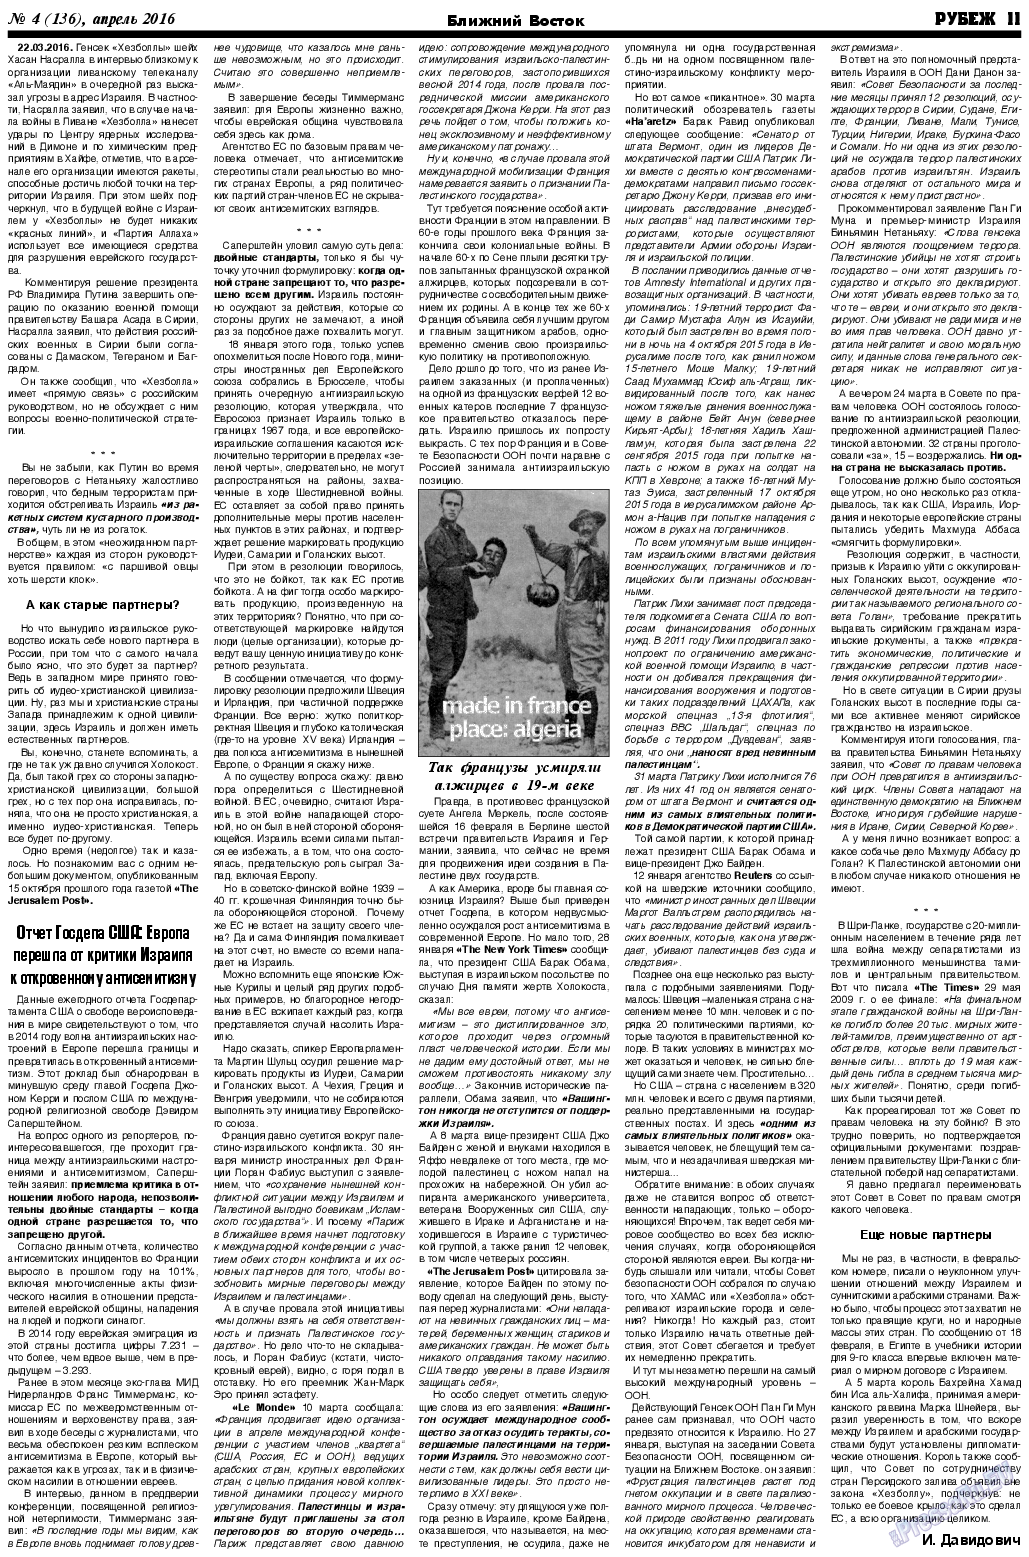 Рубеж, газета. 2016 №4 стр.11